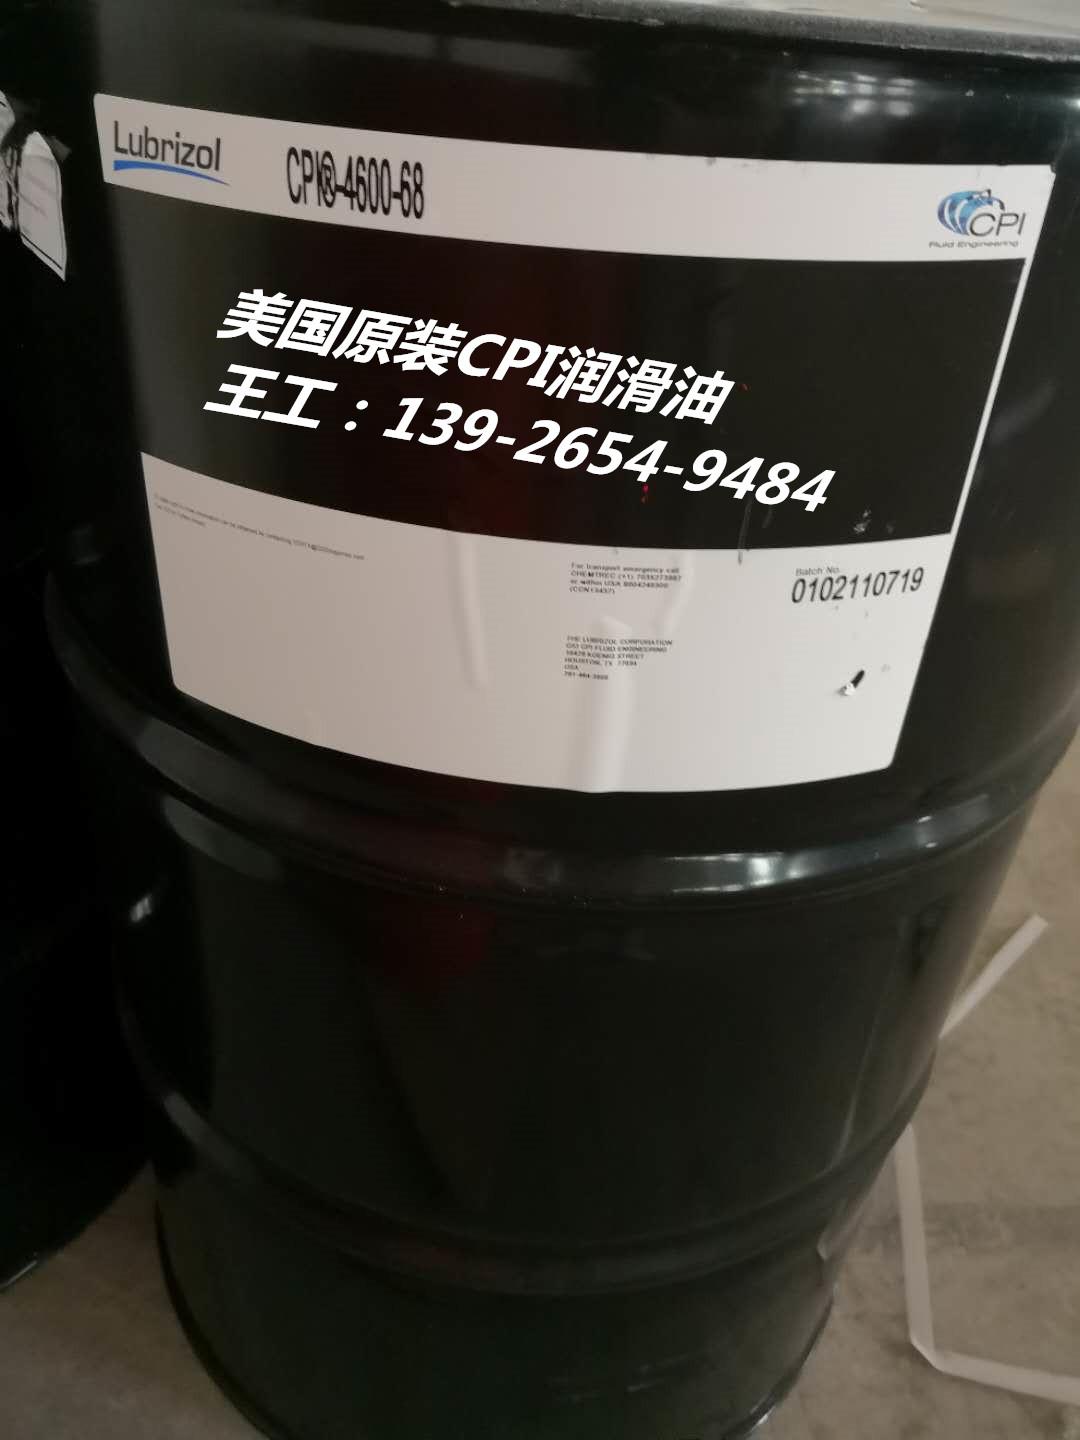 CPI-4700-68 烷基苯冷冻油 CPI-4700-100